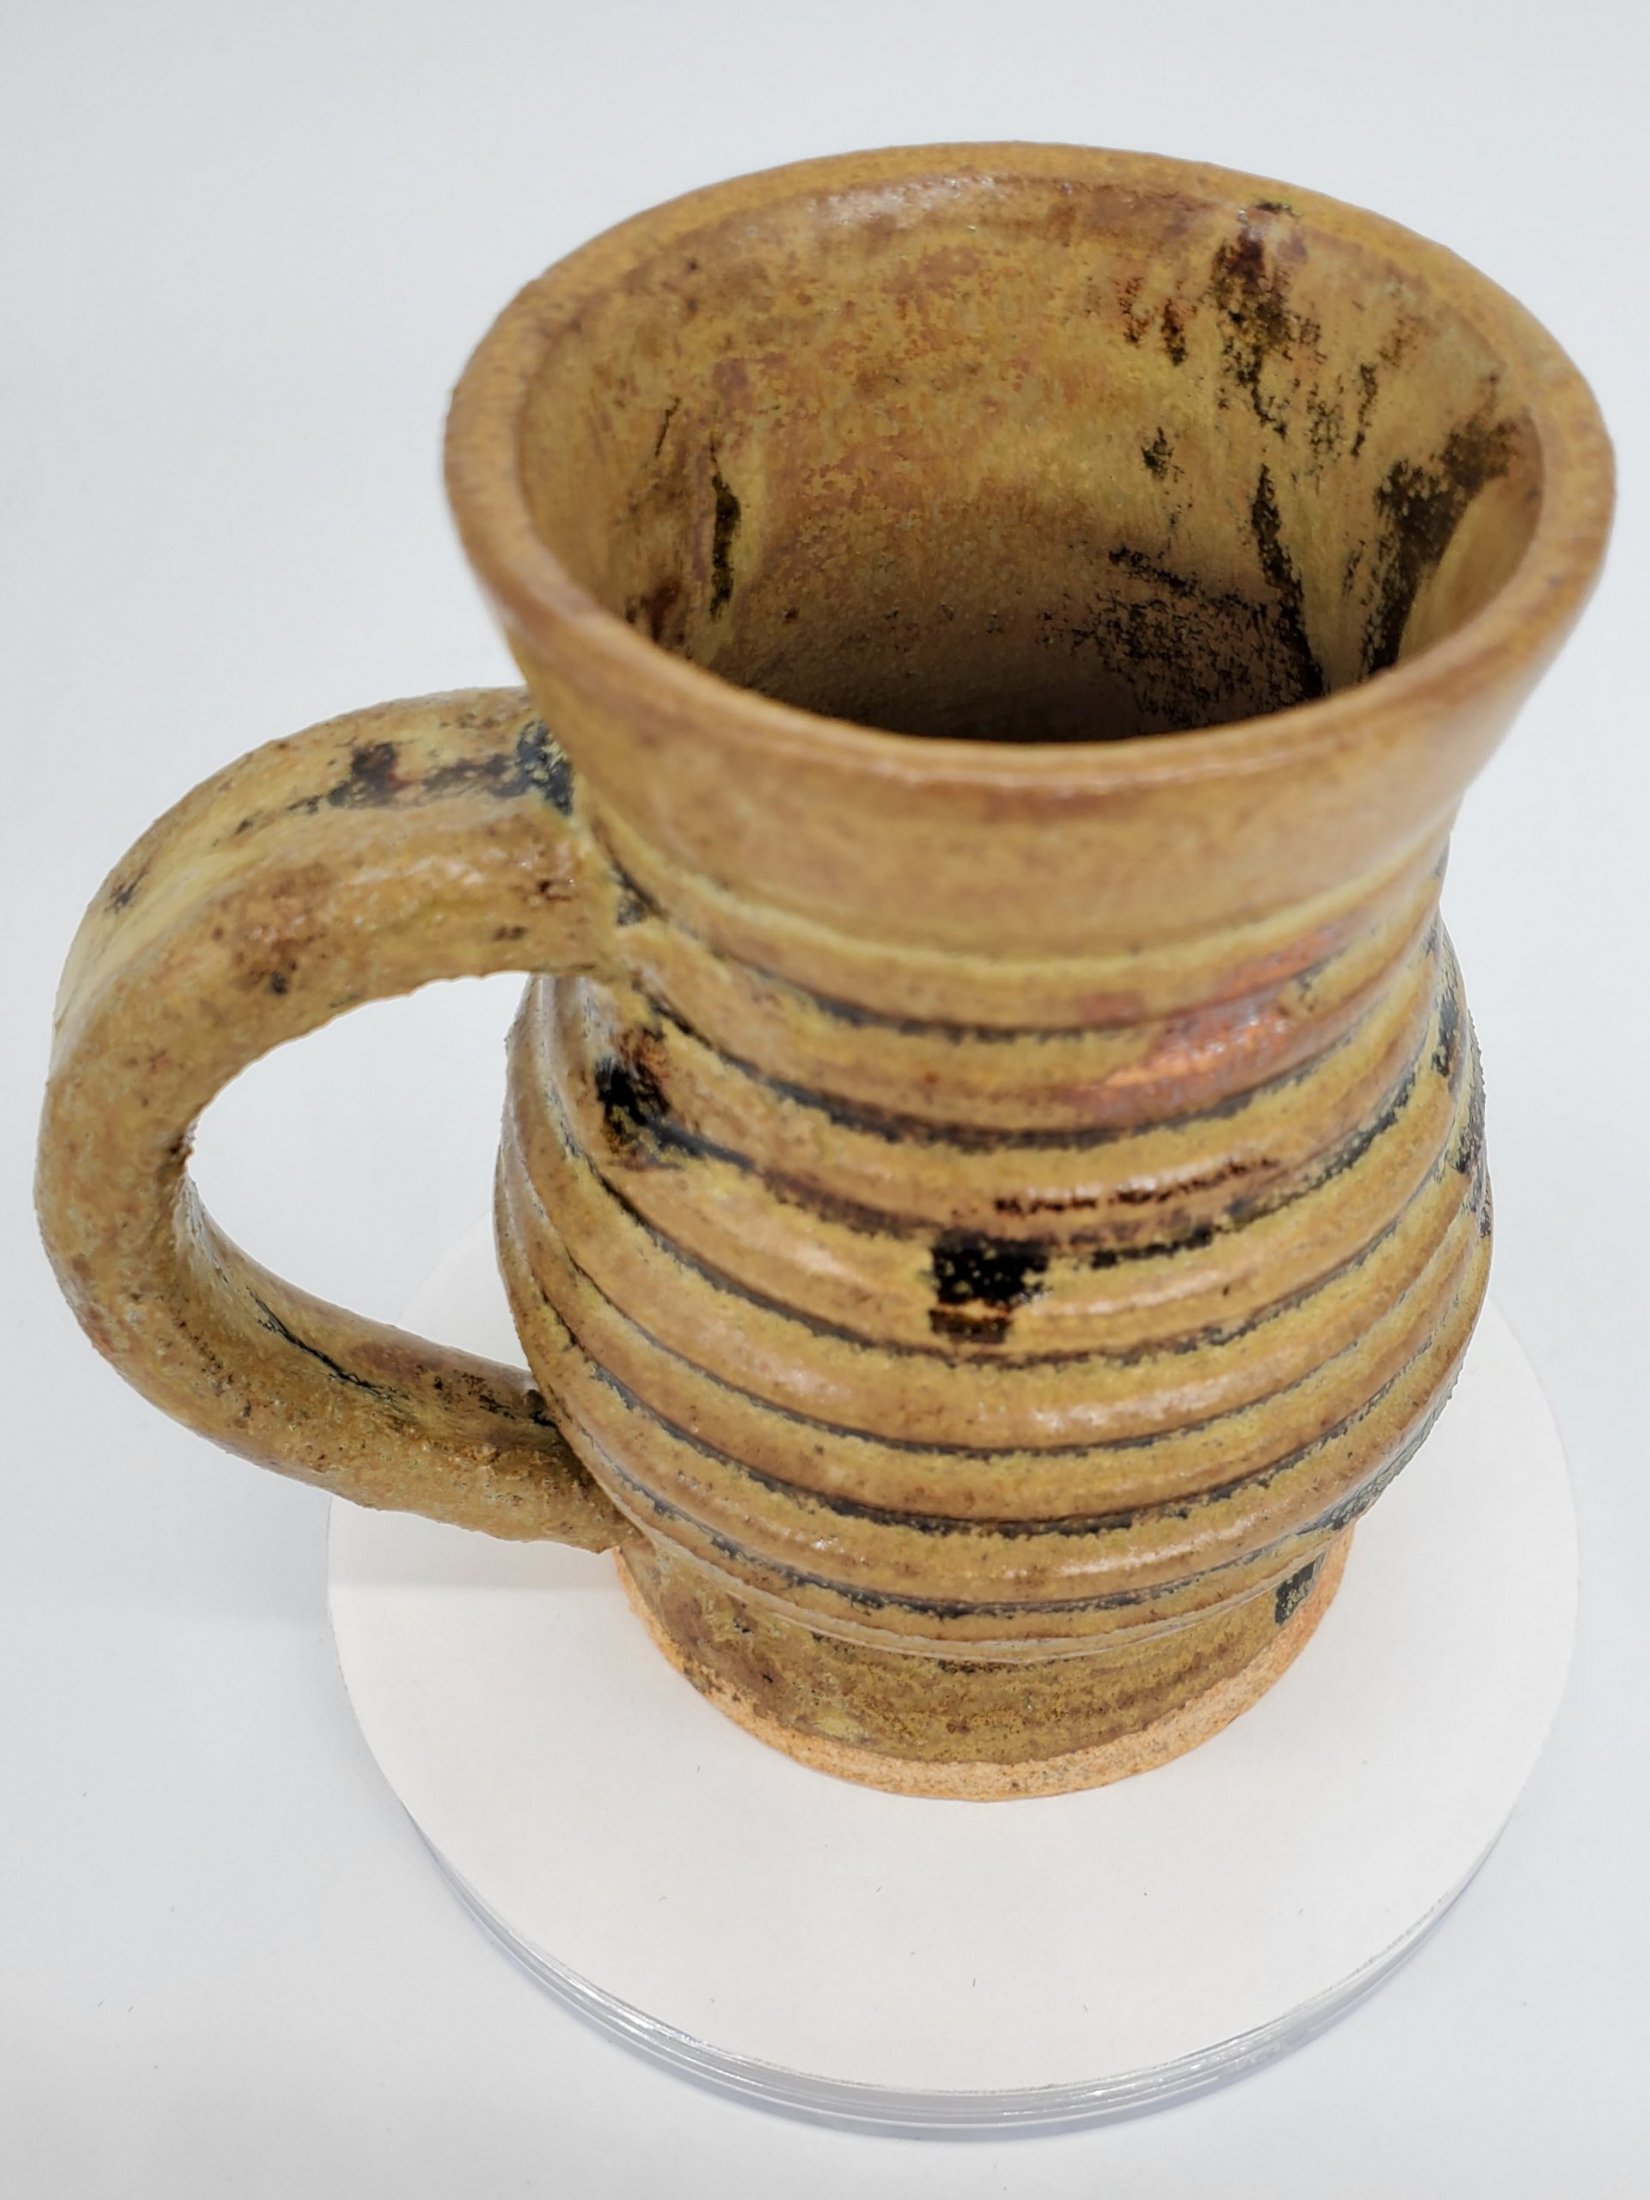 Functional Thrown Small Curvy Rustic Mug With Tortoise Shell Glaze